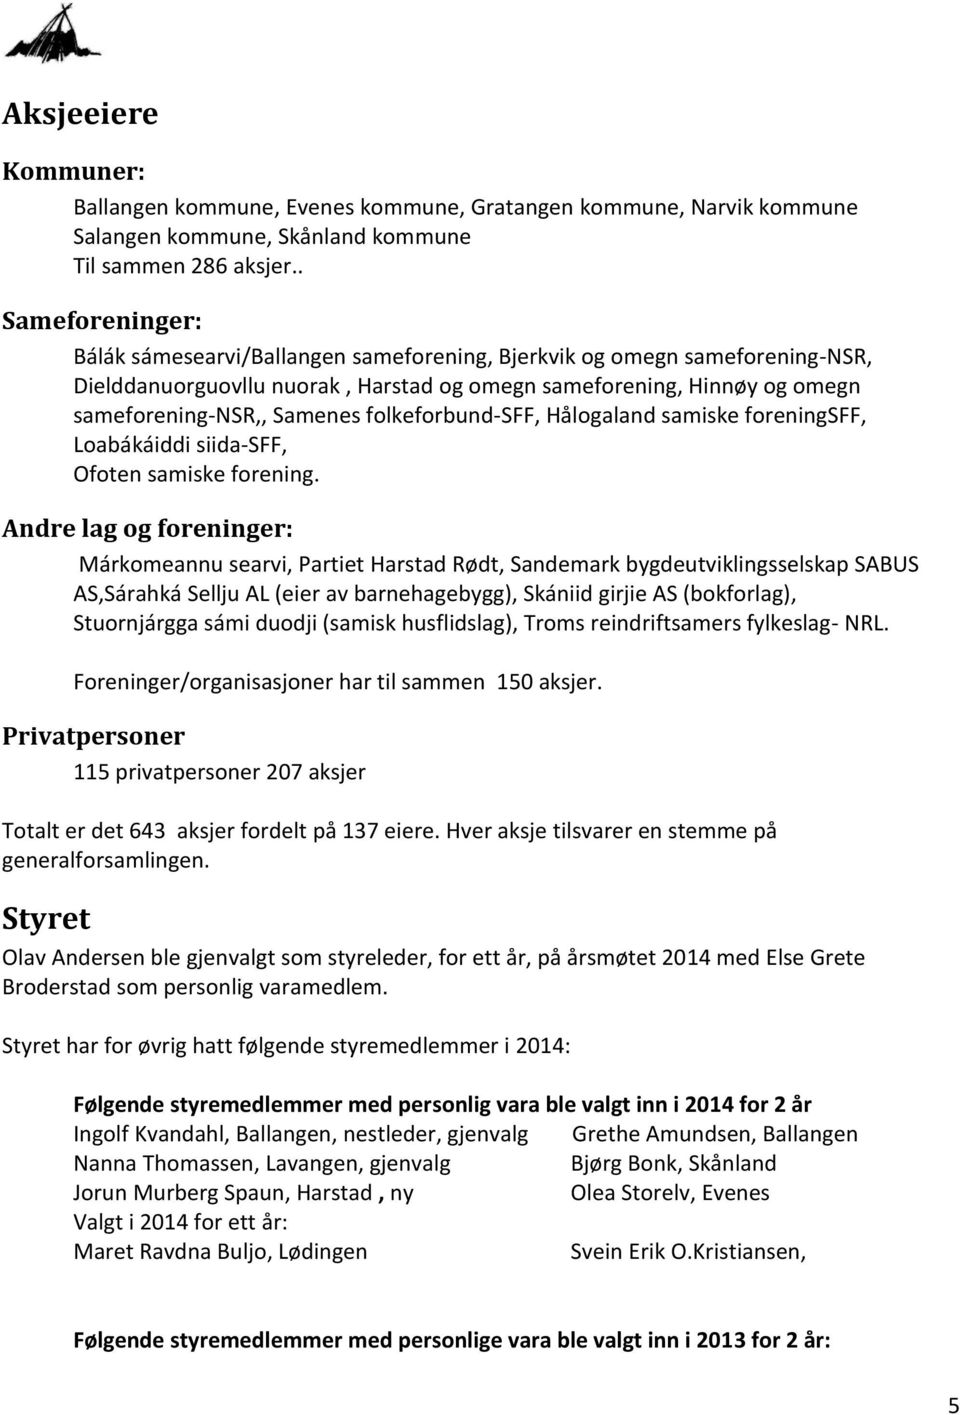 folkeforbund-sff, Hålogaland samiske foreningsff, Loabákáiddi siida-sff, Ofoten samiske forening.